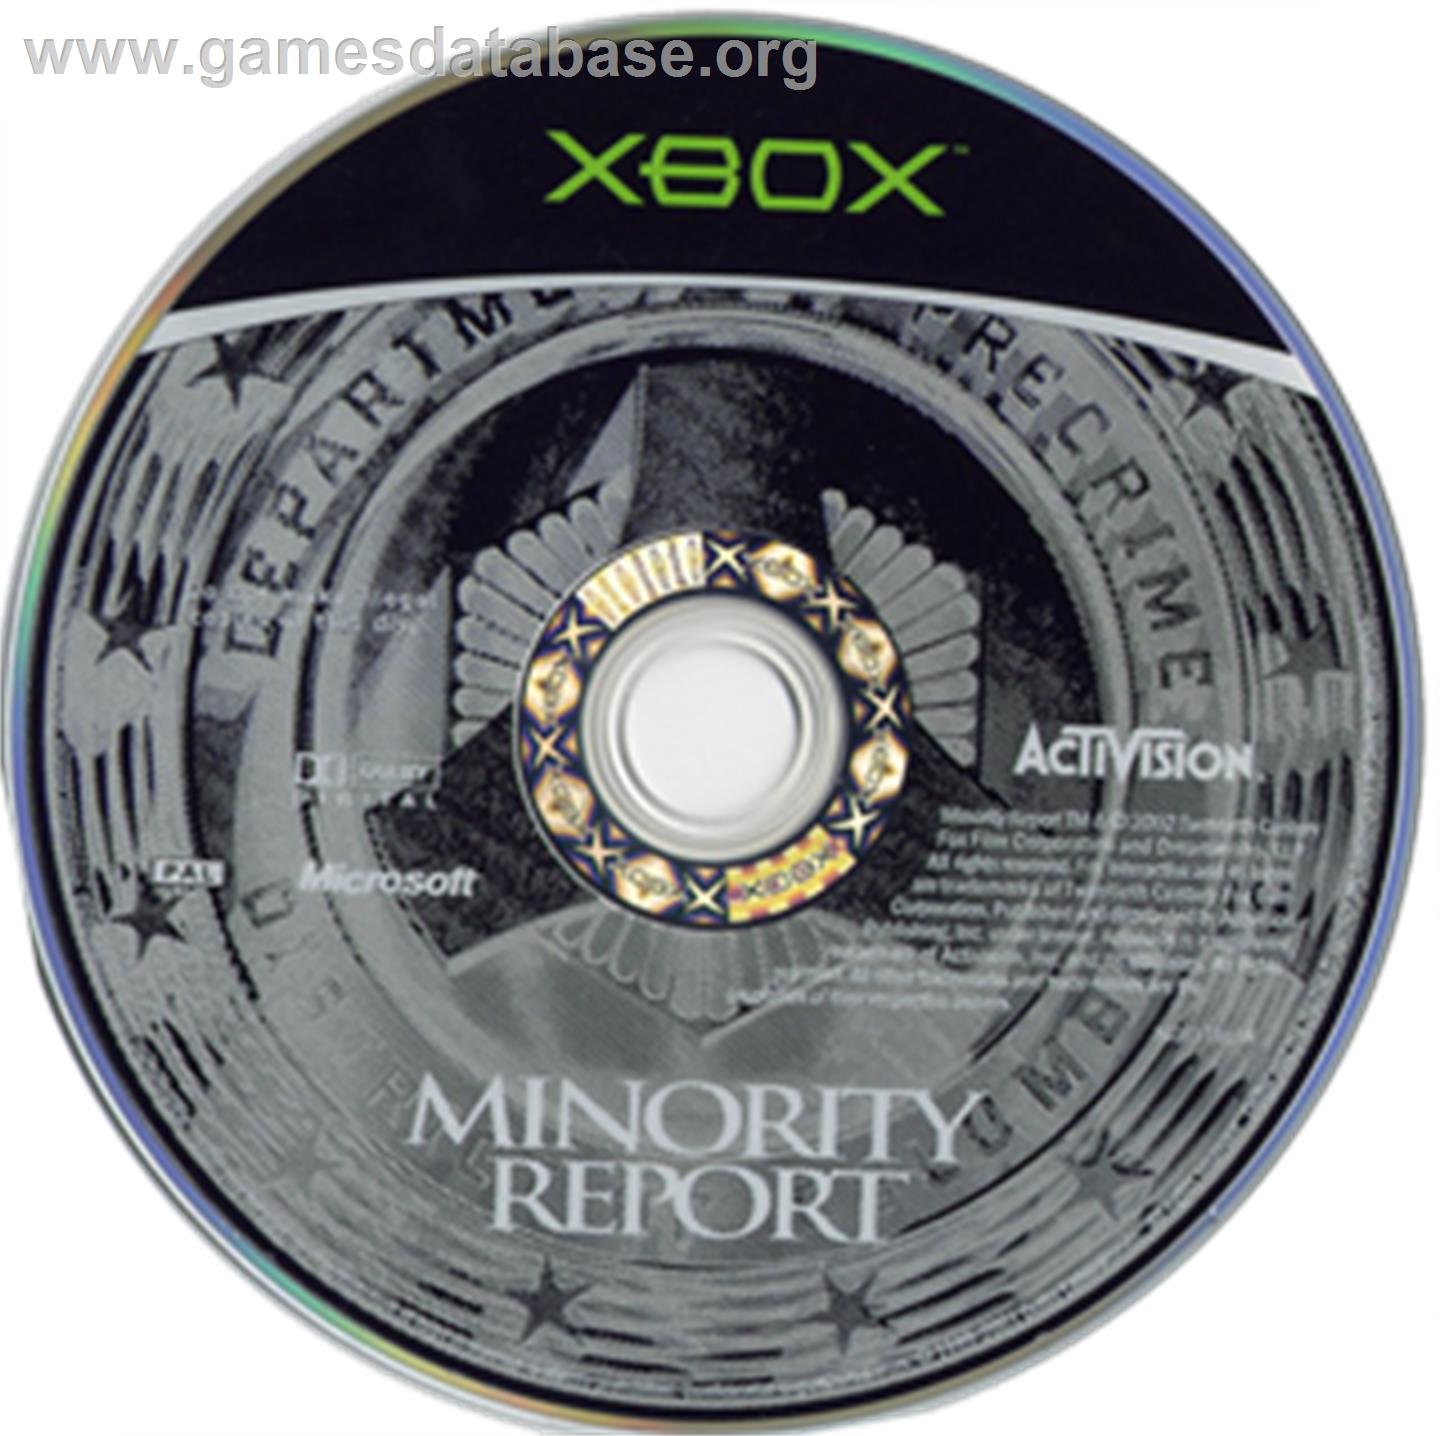 Minority Report: Everybody Runs - Microsoft Xbox - Artwork - CD